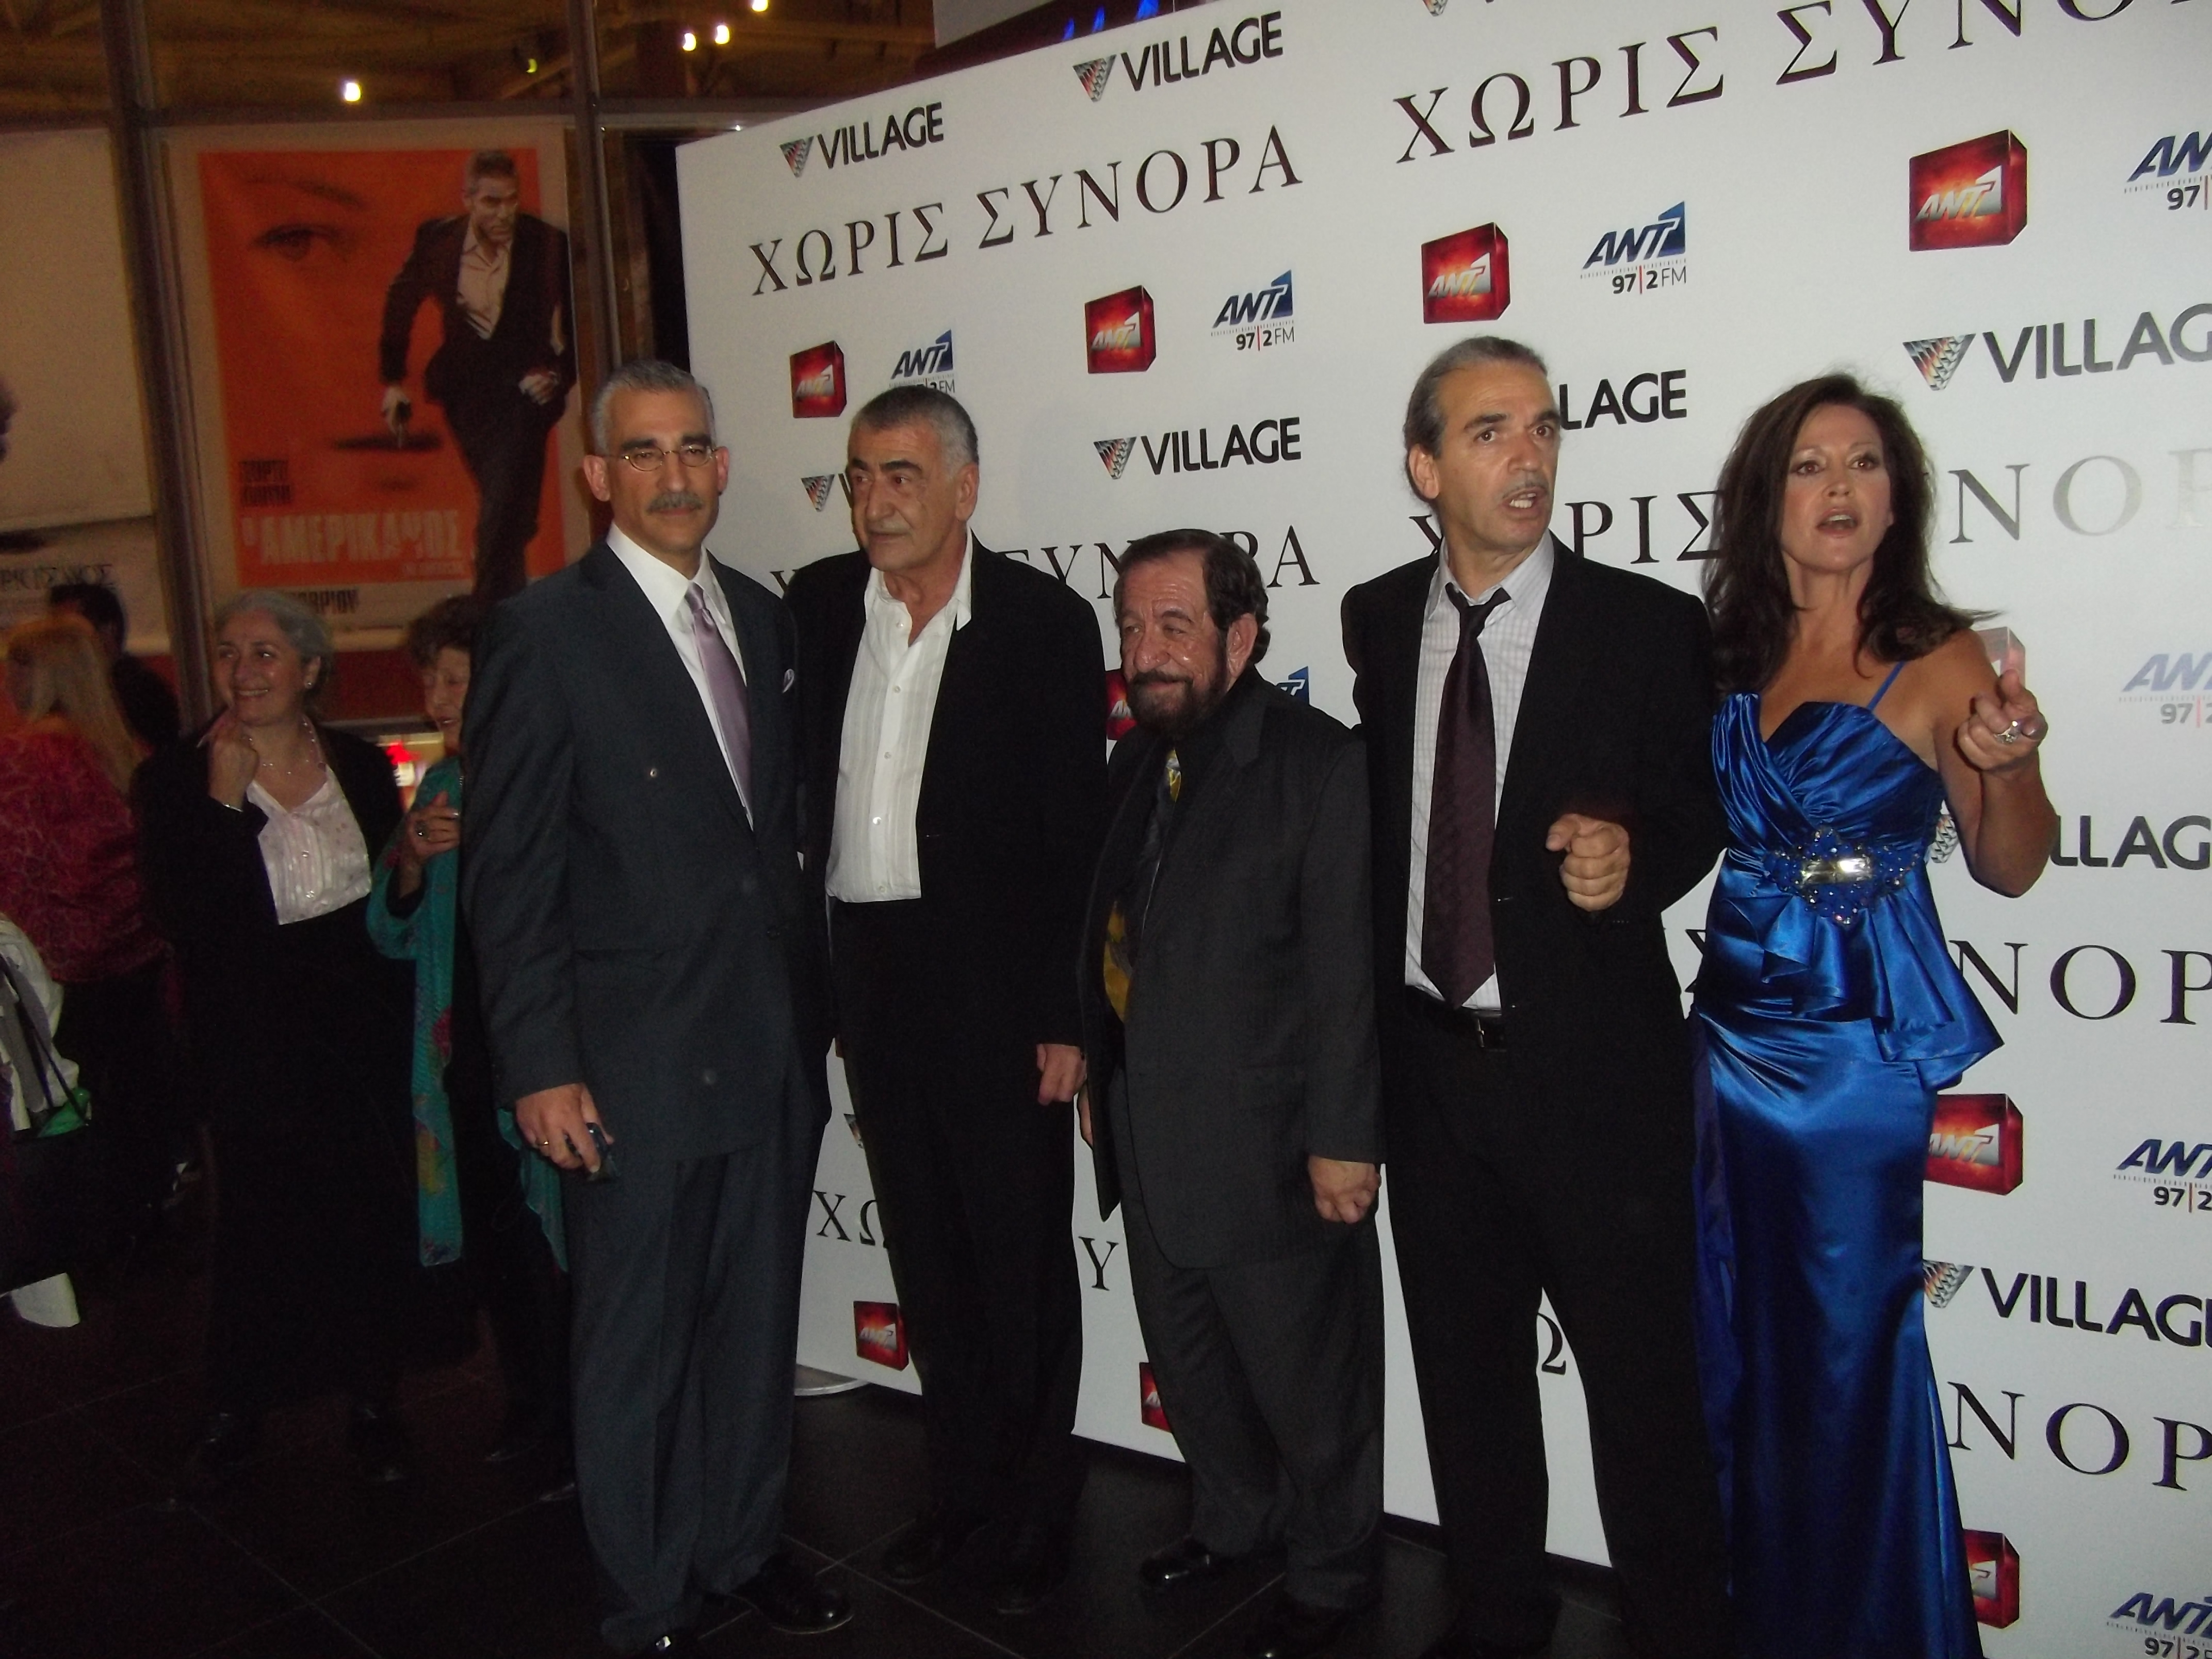 Jesse & Director Nick Gaitatjis, Actor Yorgo Voyagis, Producer/Actress, Sandra Staggs (in beautiful blue gown),& Actor Paul Lillios at 